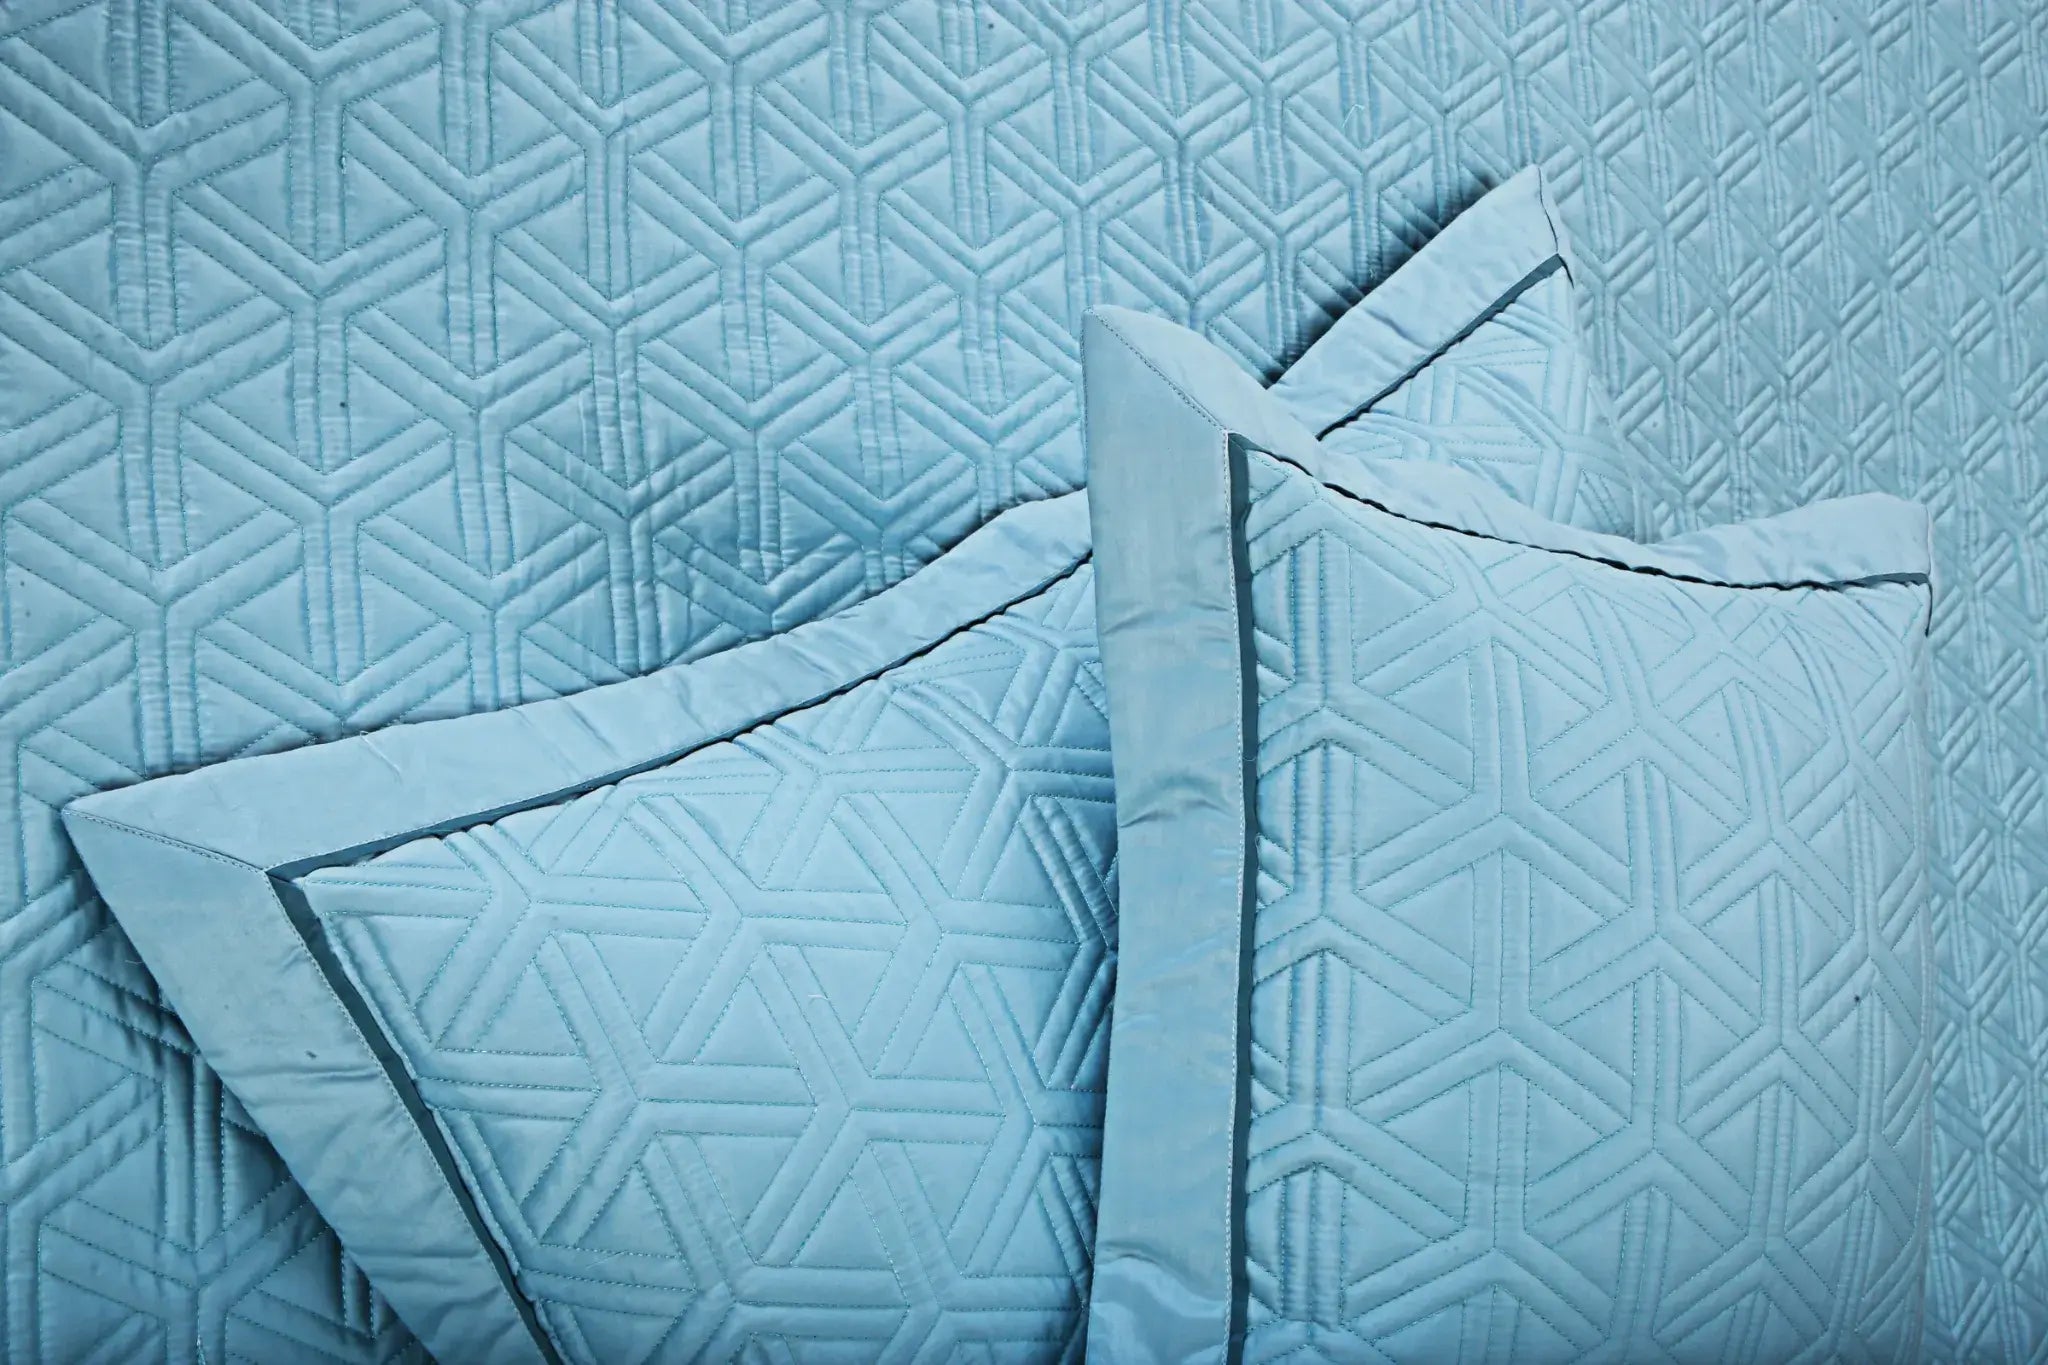 Malako Kairo 500 TC Maya Blue Solid King Size 100% Cotton Quilted Bed Cover Set - MALAKO